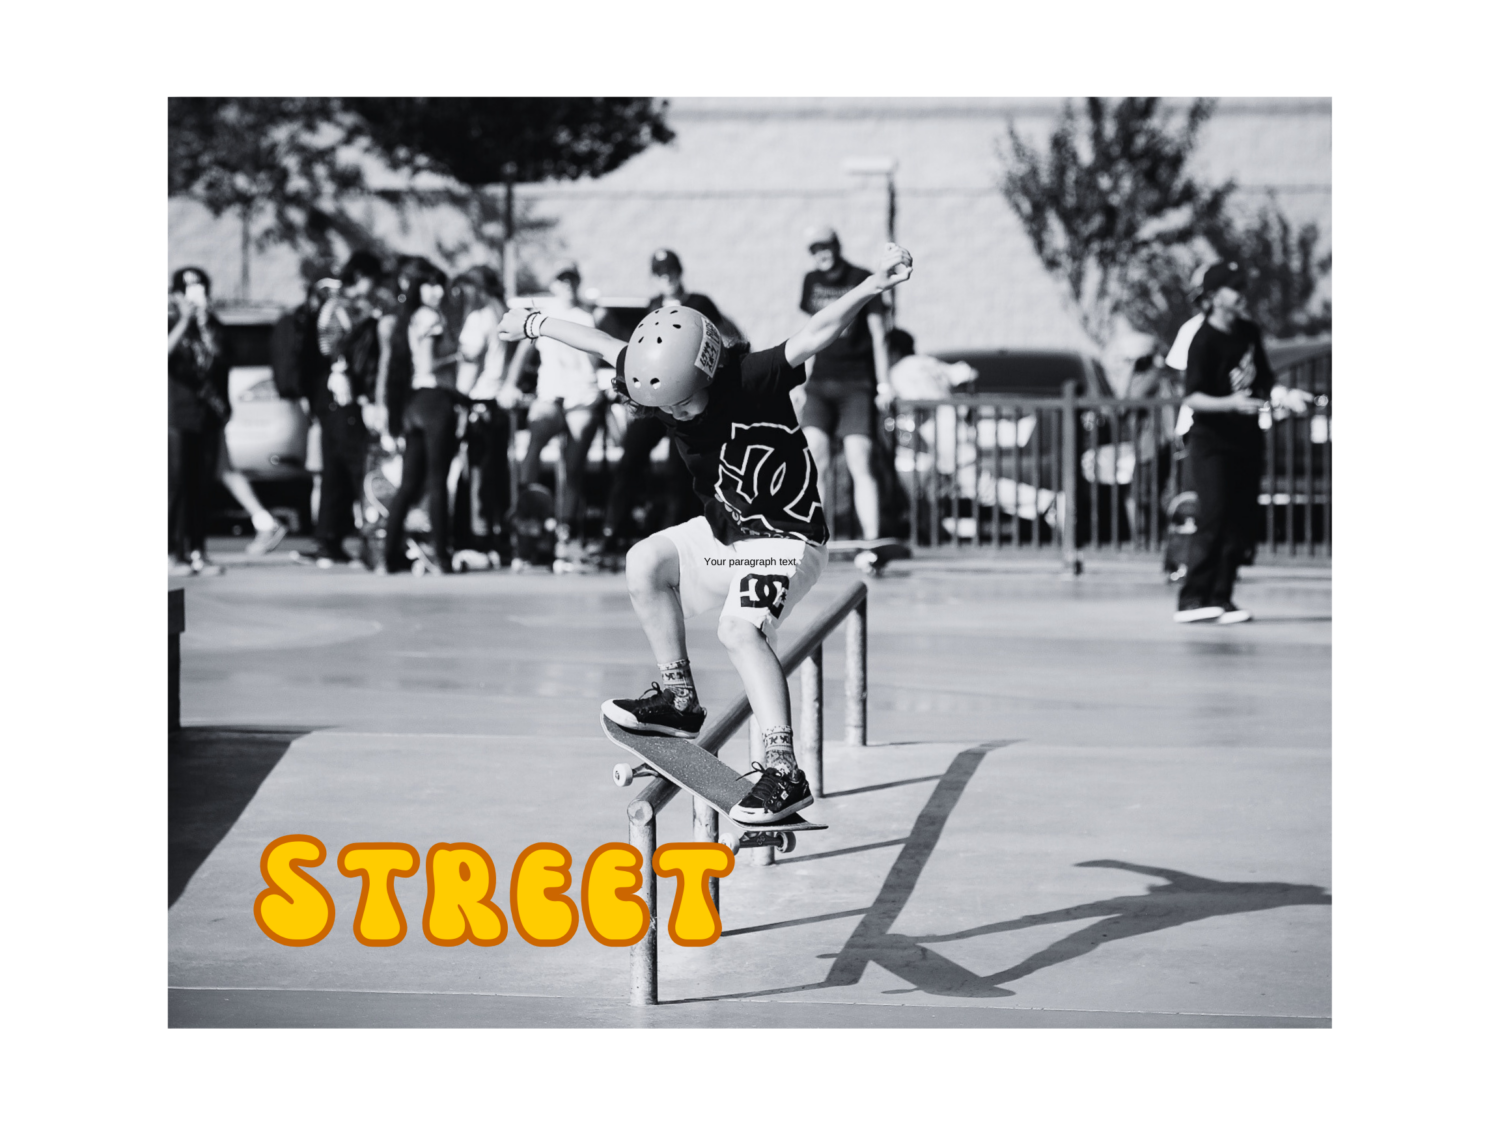 amateur skateboarding shop sponsorships Xxx Photos